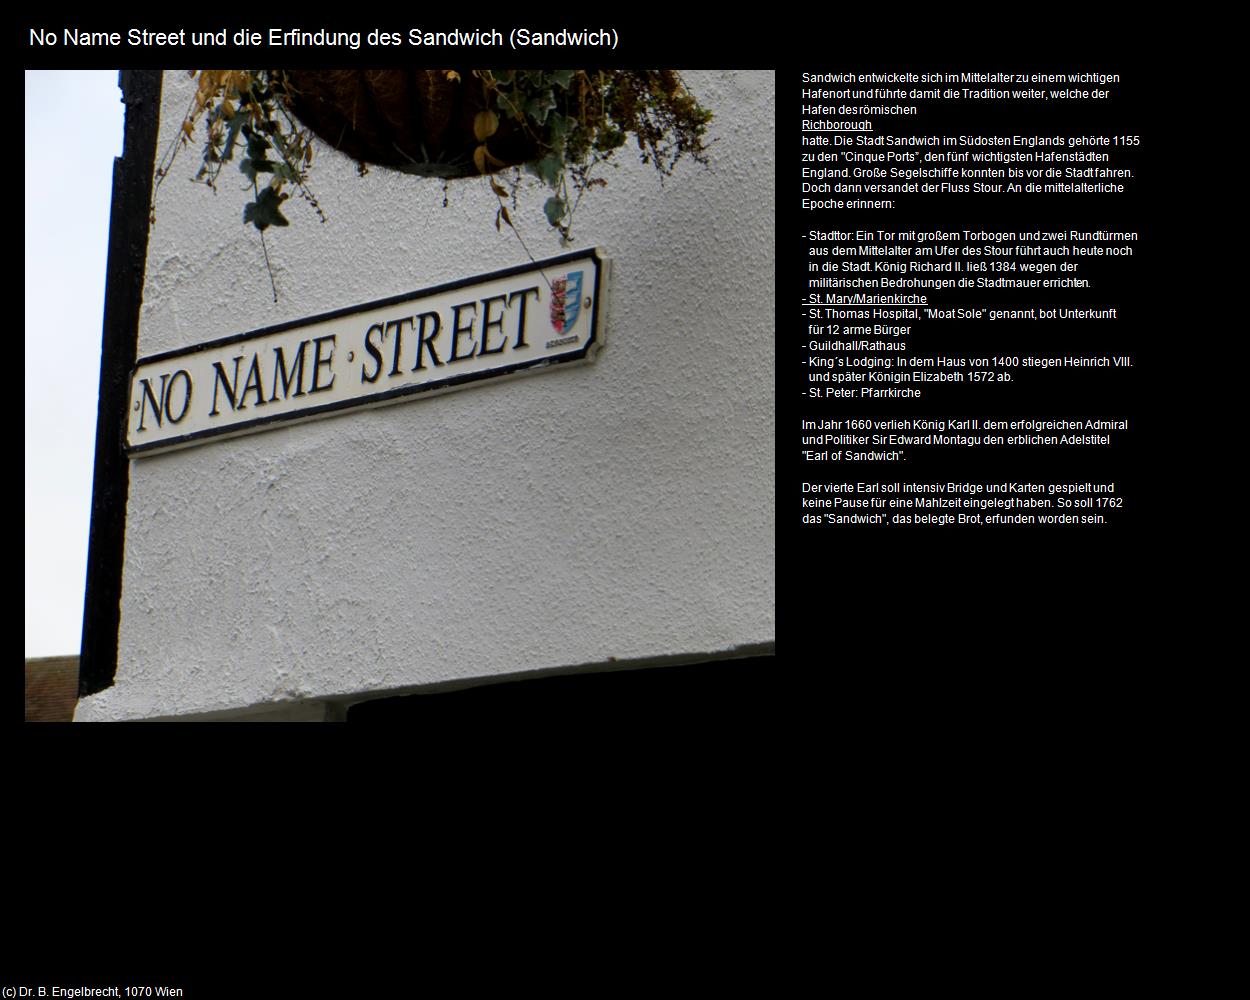 No-Name-Street (Sandwich, England ) in Kulturatlas-ENGLAND und WALES(c)B.Engelbrecht